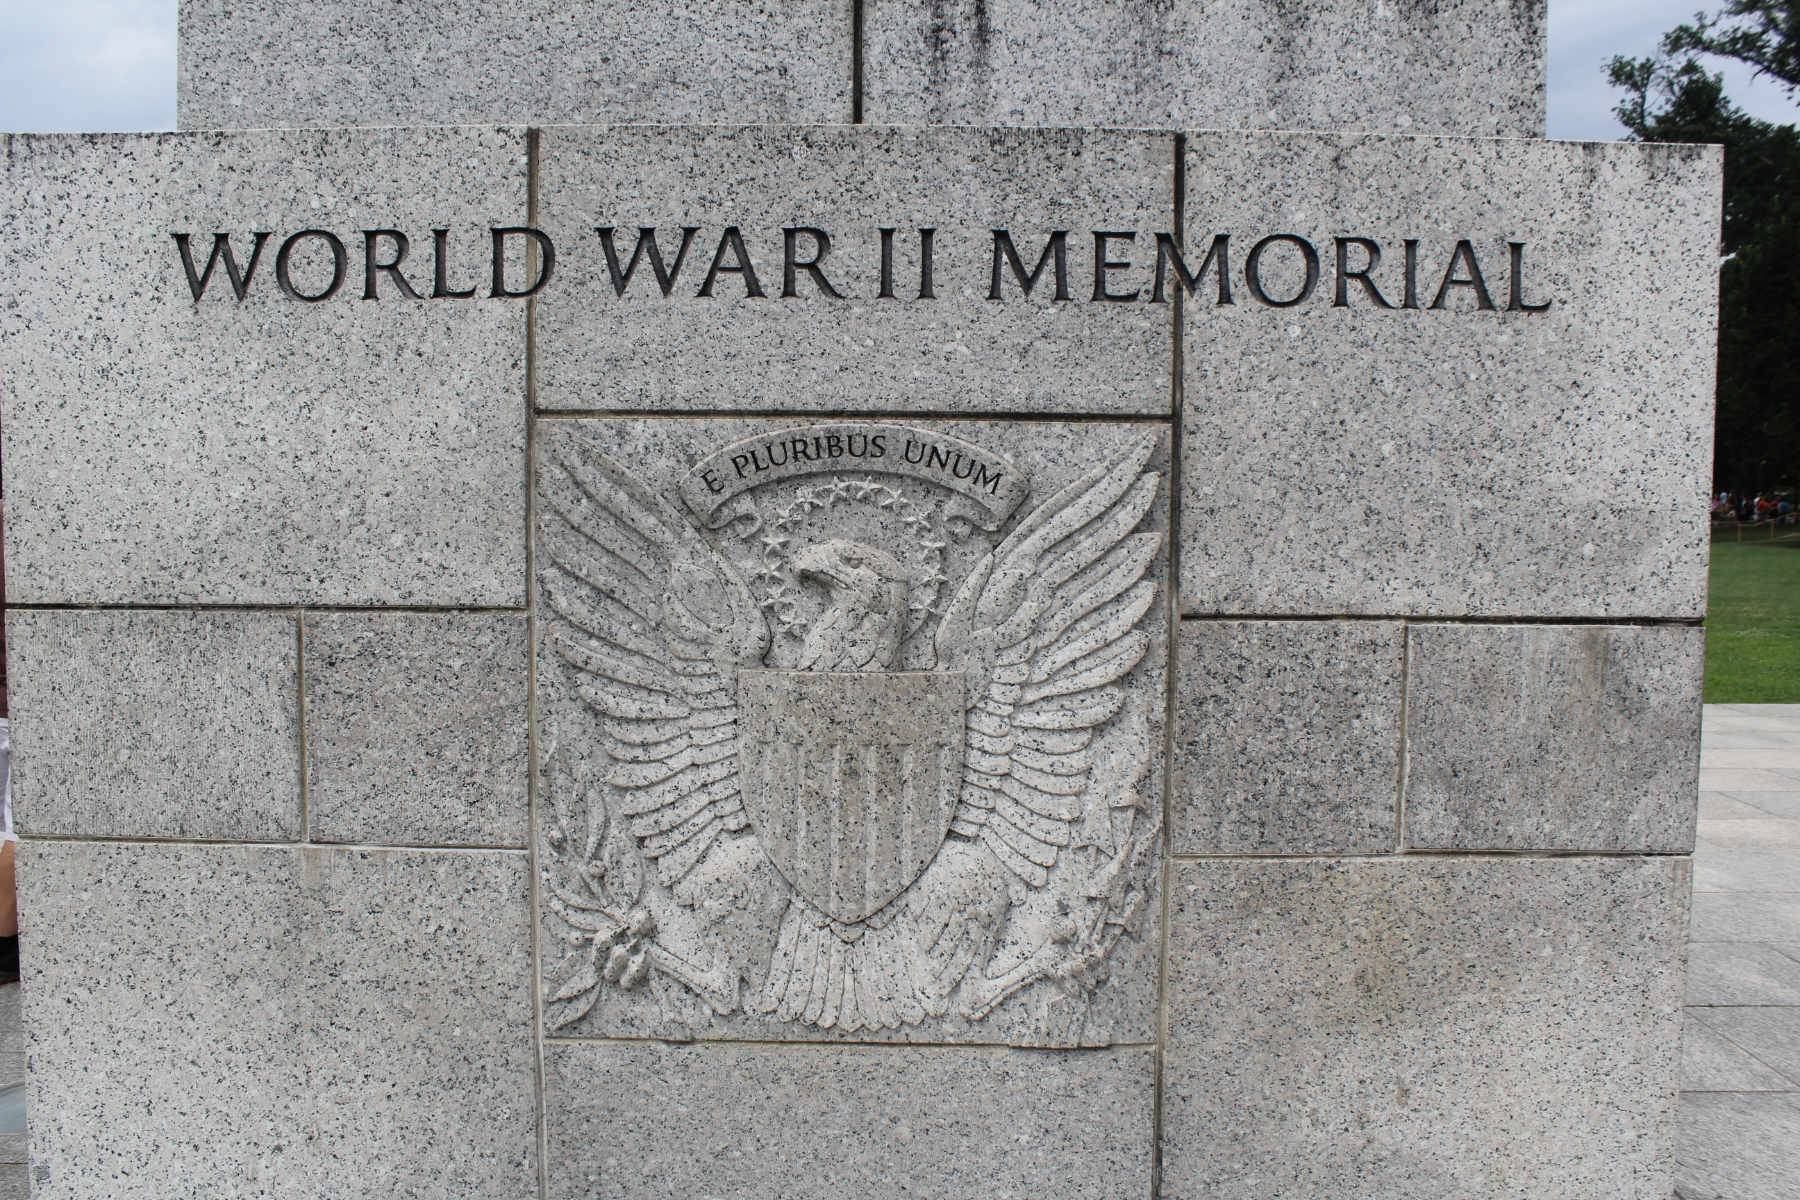 “World War II Memorial”